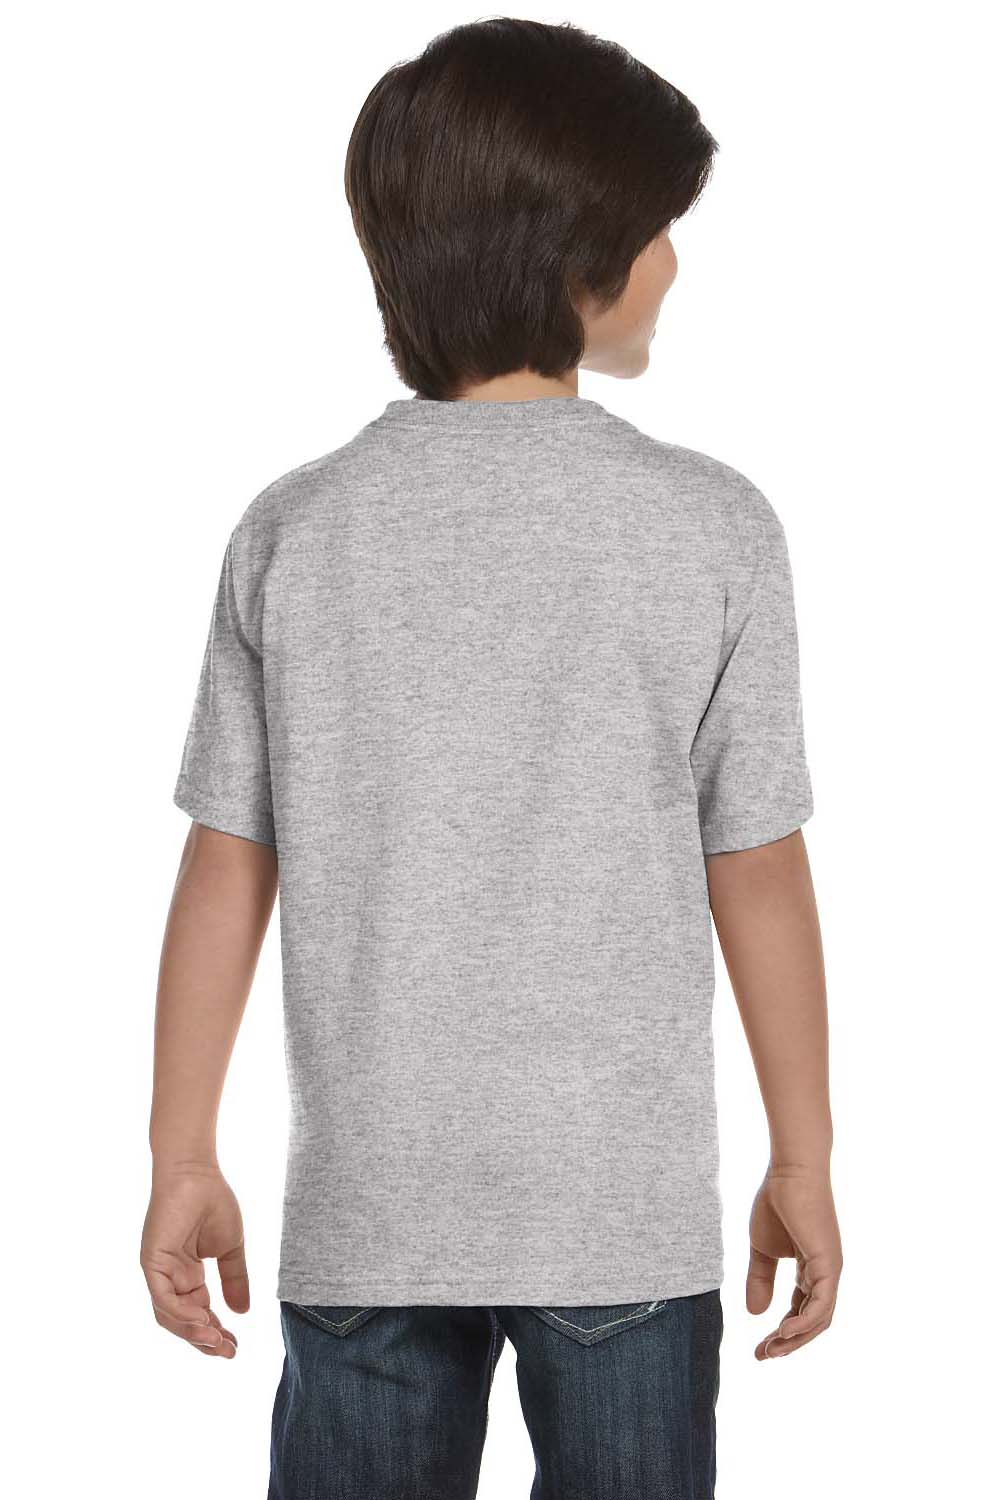 Hanes 5380 Youth Beefy-T Short Sleeve Crewneck T-Shirt Light Steel Grey Back